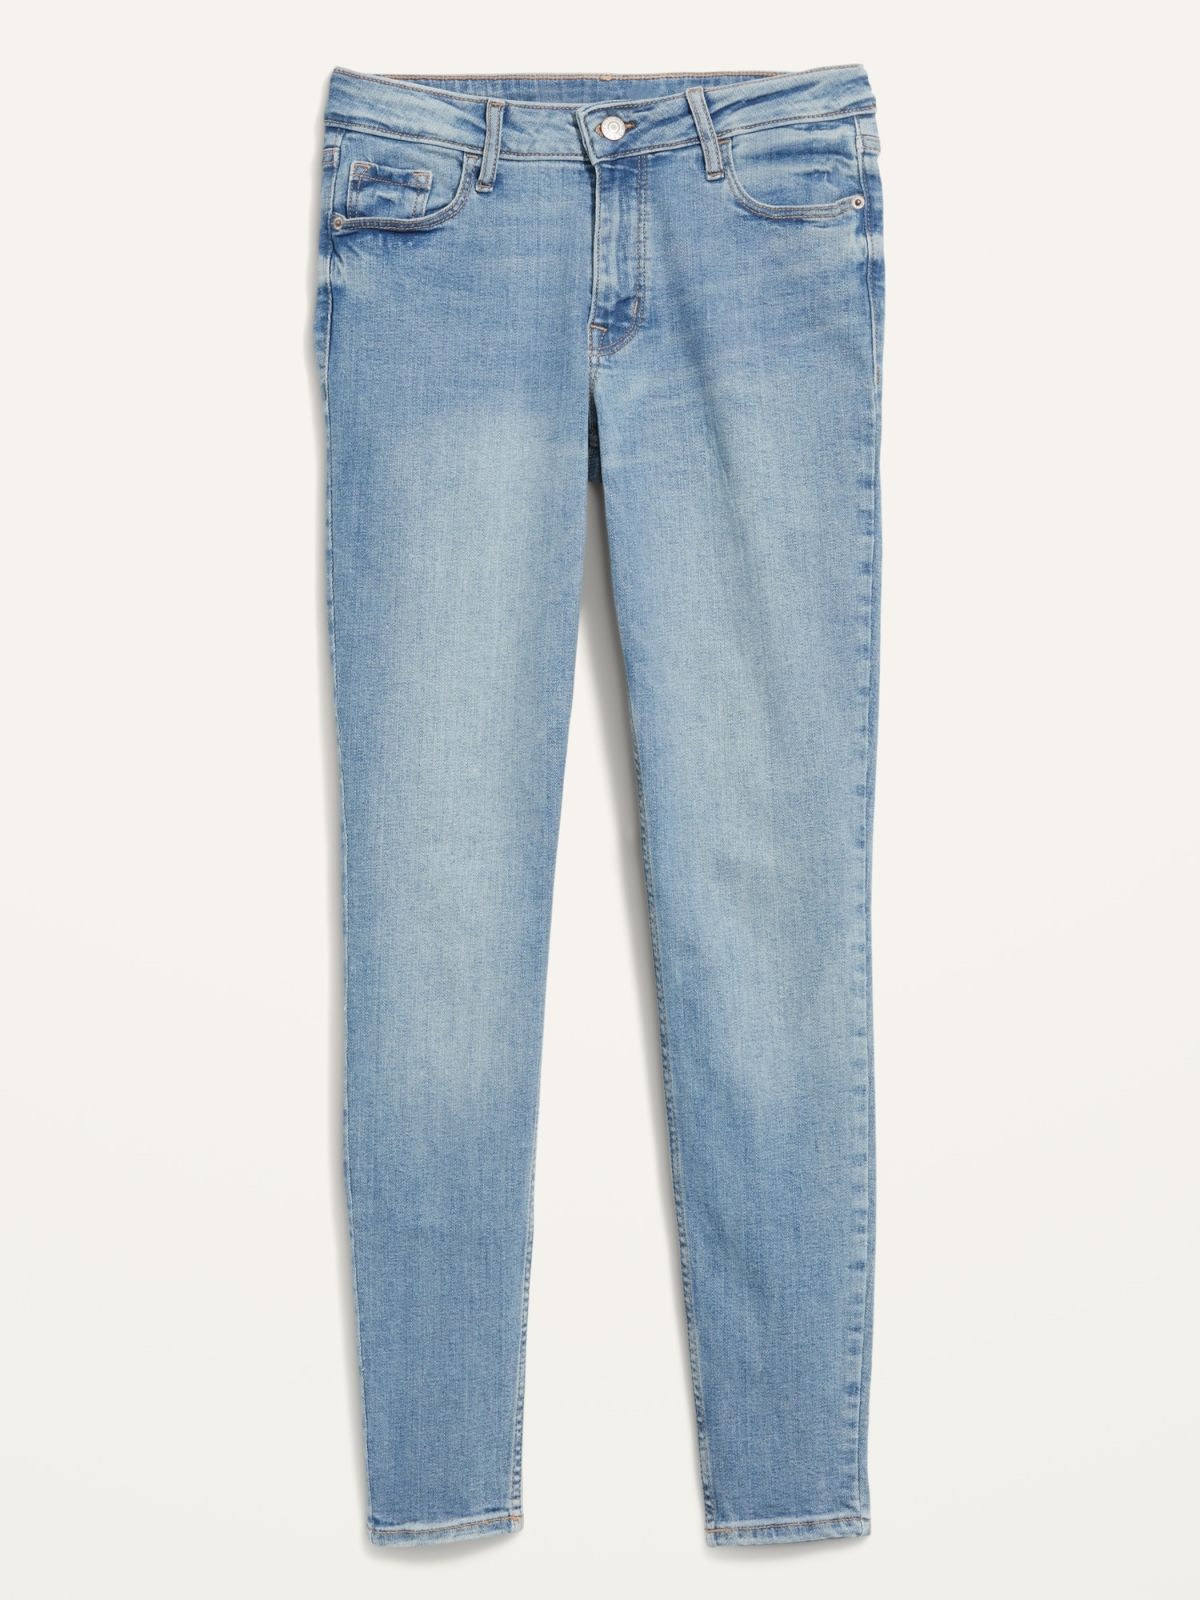  ג'ינס ארוך Super Skinny של OLD NAVY